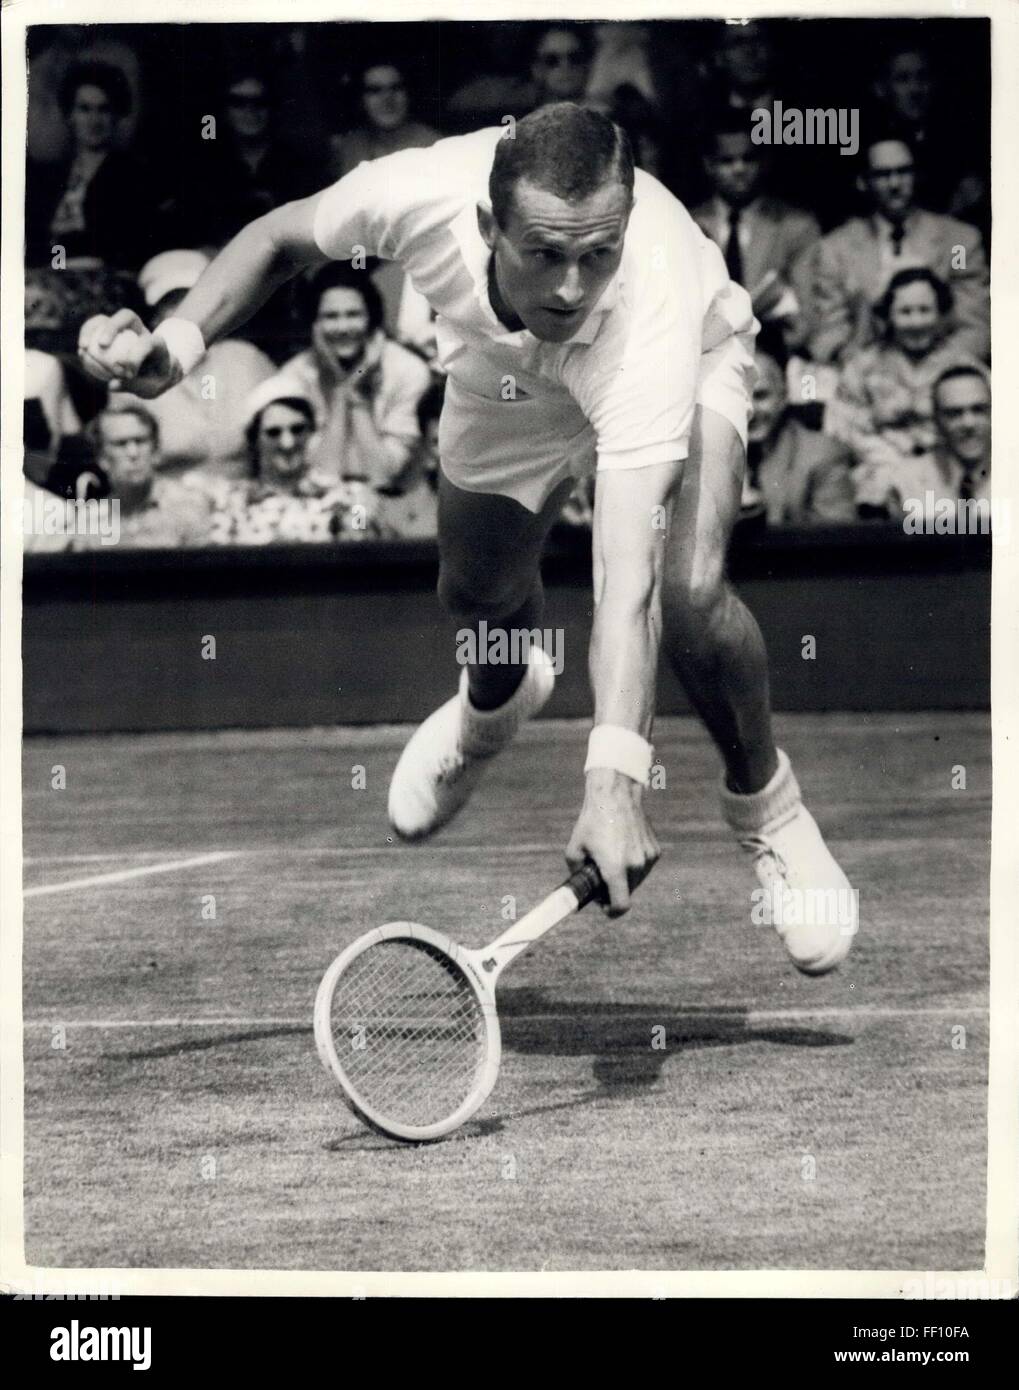 1961 - Tennis in Wimbledon